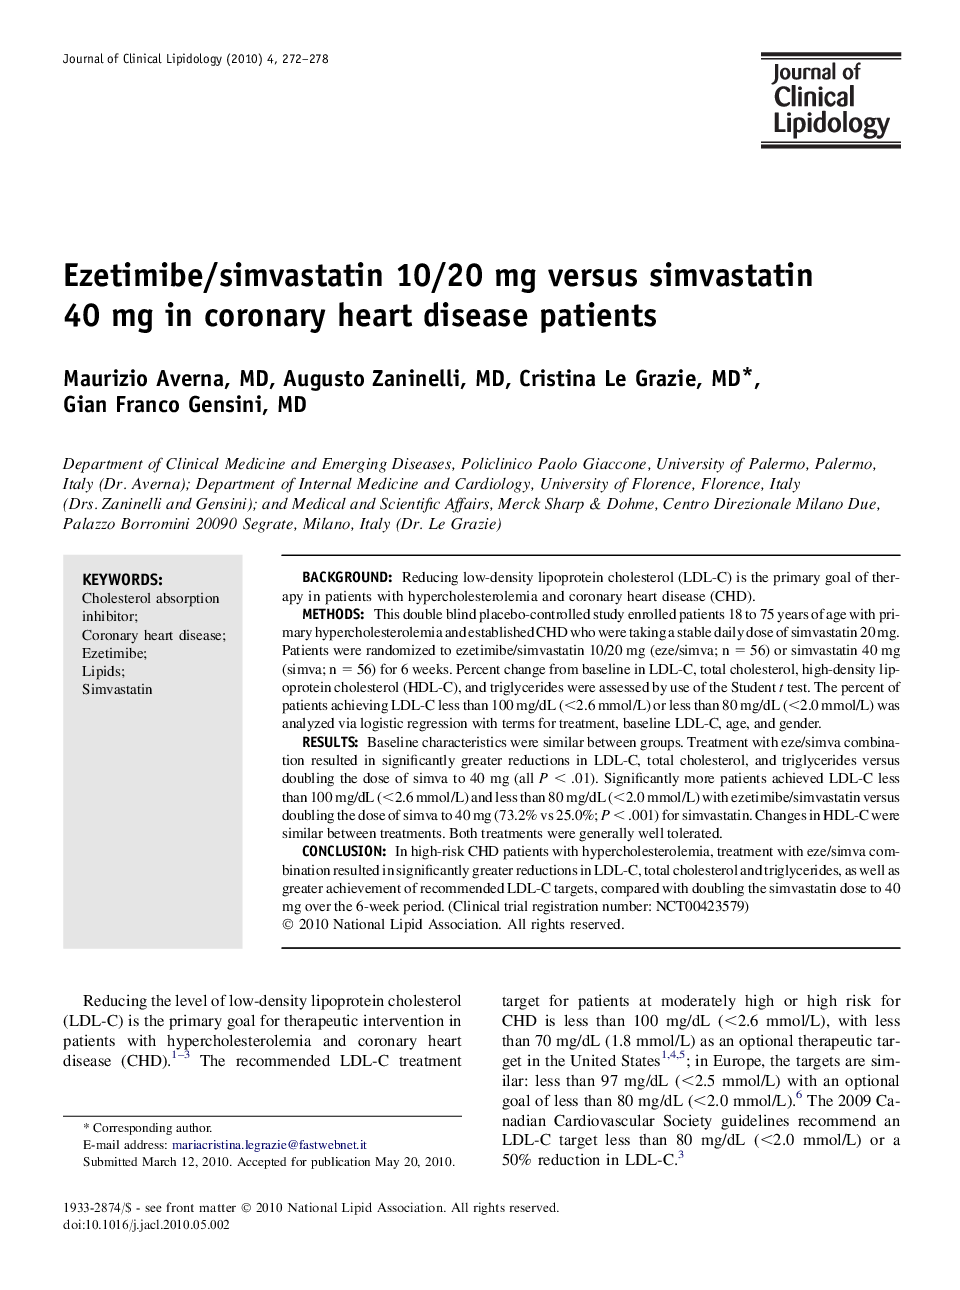 Ezetimibe/simvastatin 10/20 mg versus simvastatin 40 mg in coronary heart disease patients